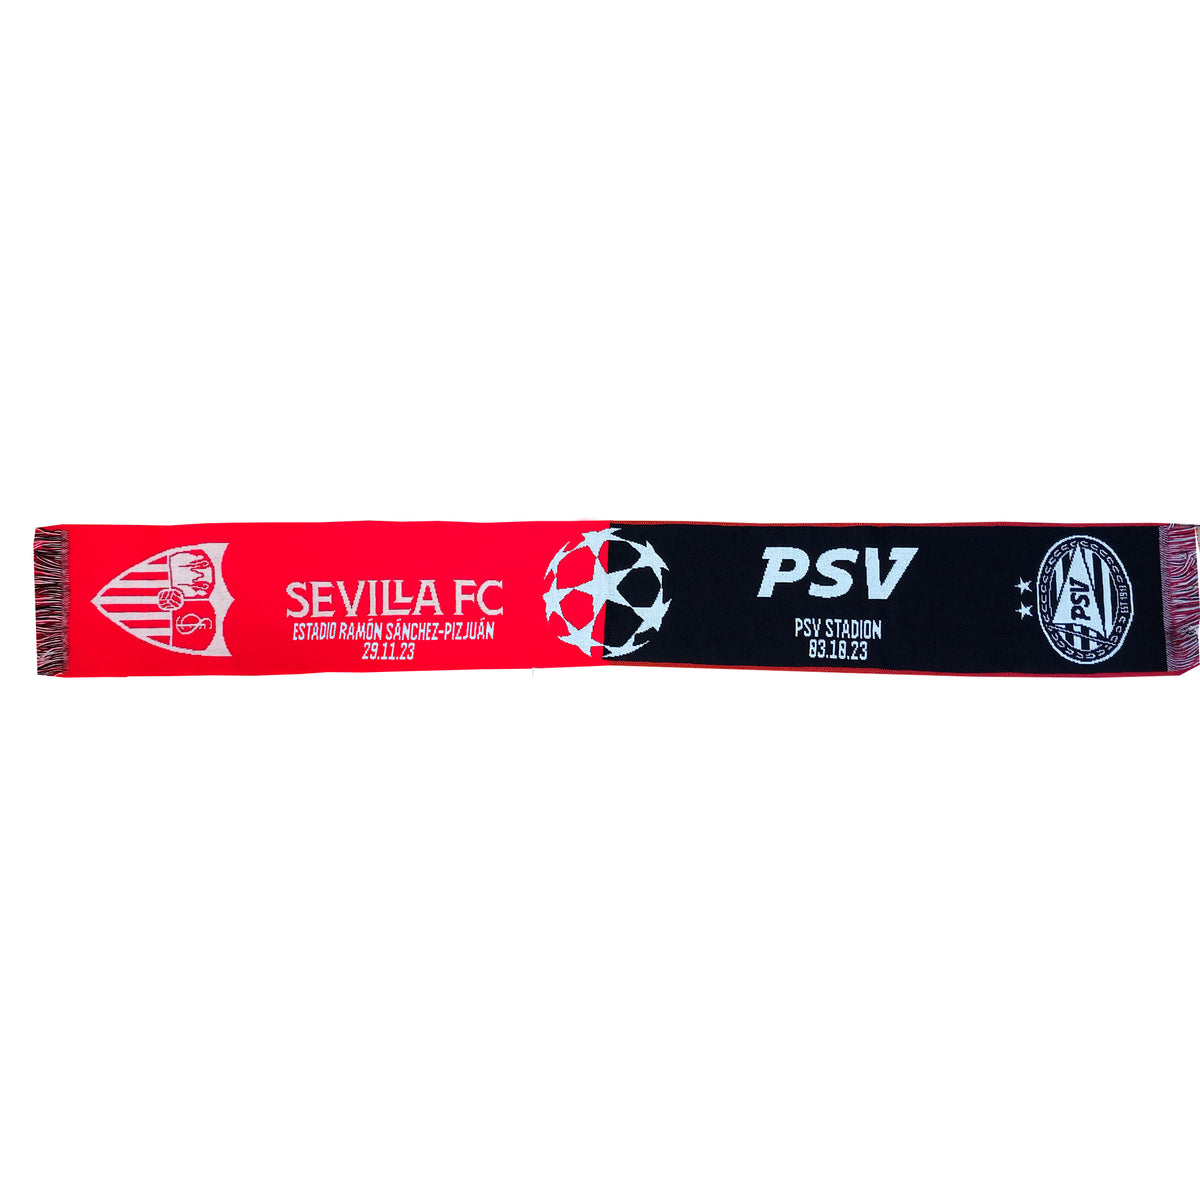 Champions League Vs. PSV Scarf